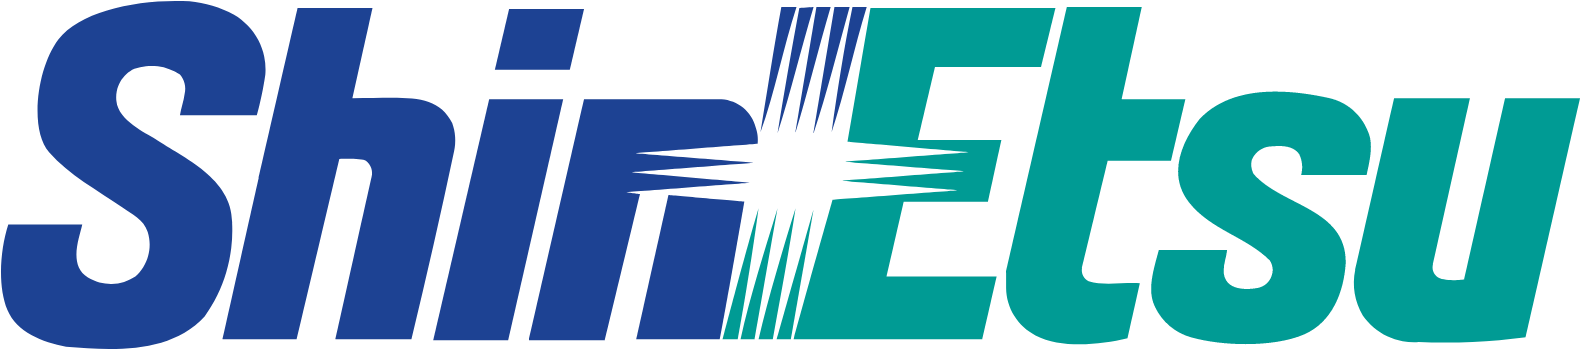 Shin-Etsu Chemical logo large (transparent PNG)